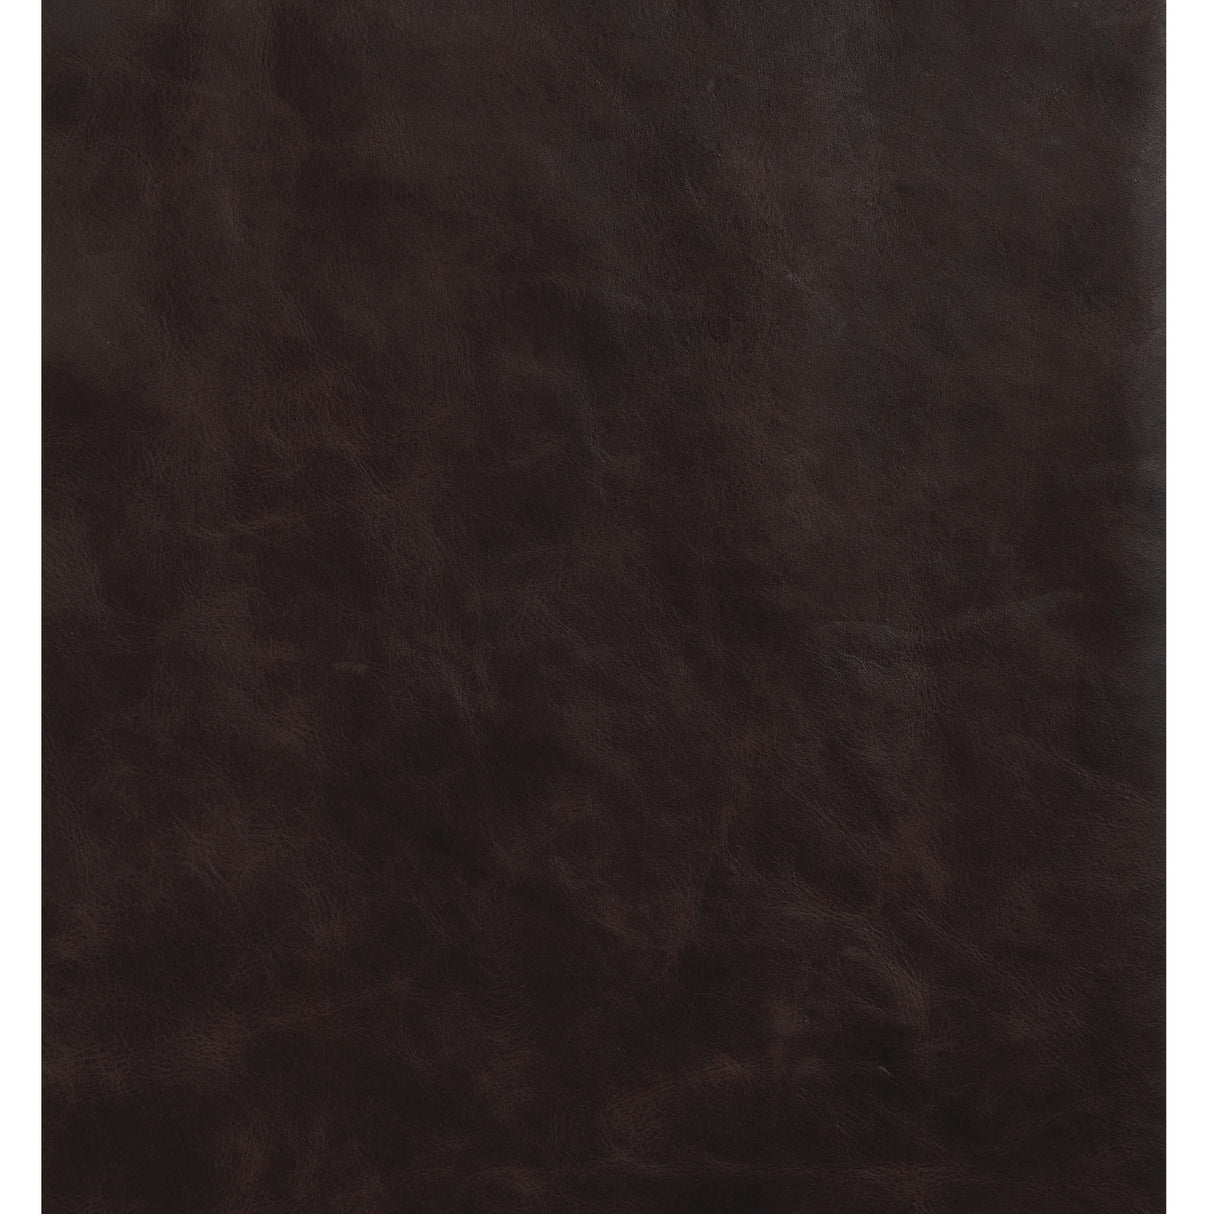 Leather Master Edge Paint, Black, 33.8 oz. - Weaver Leather Supply